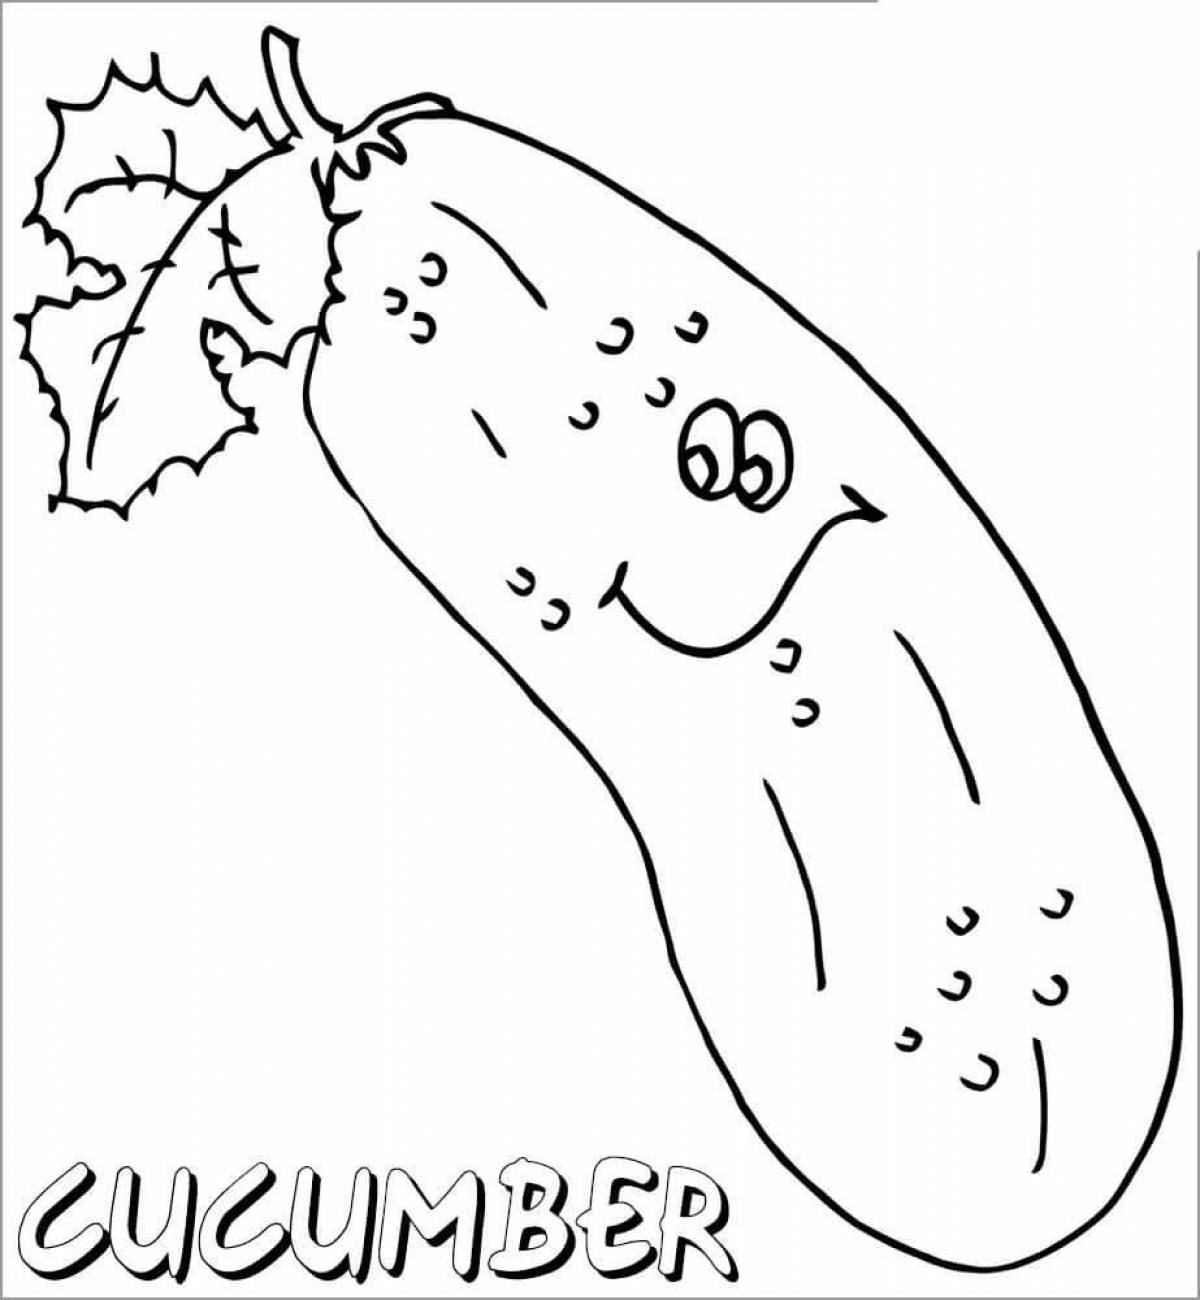 Fun cucumber coloring book for kids